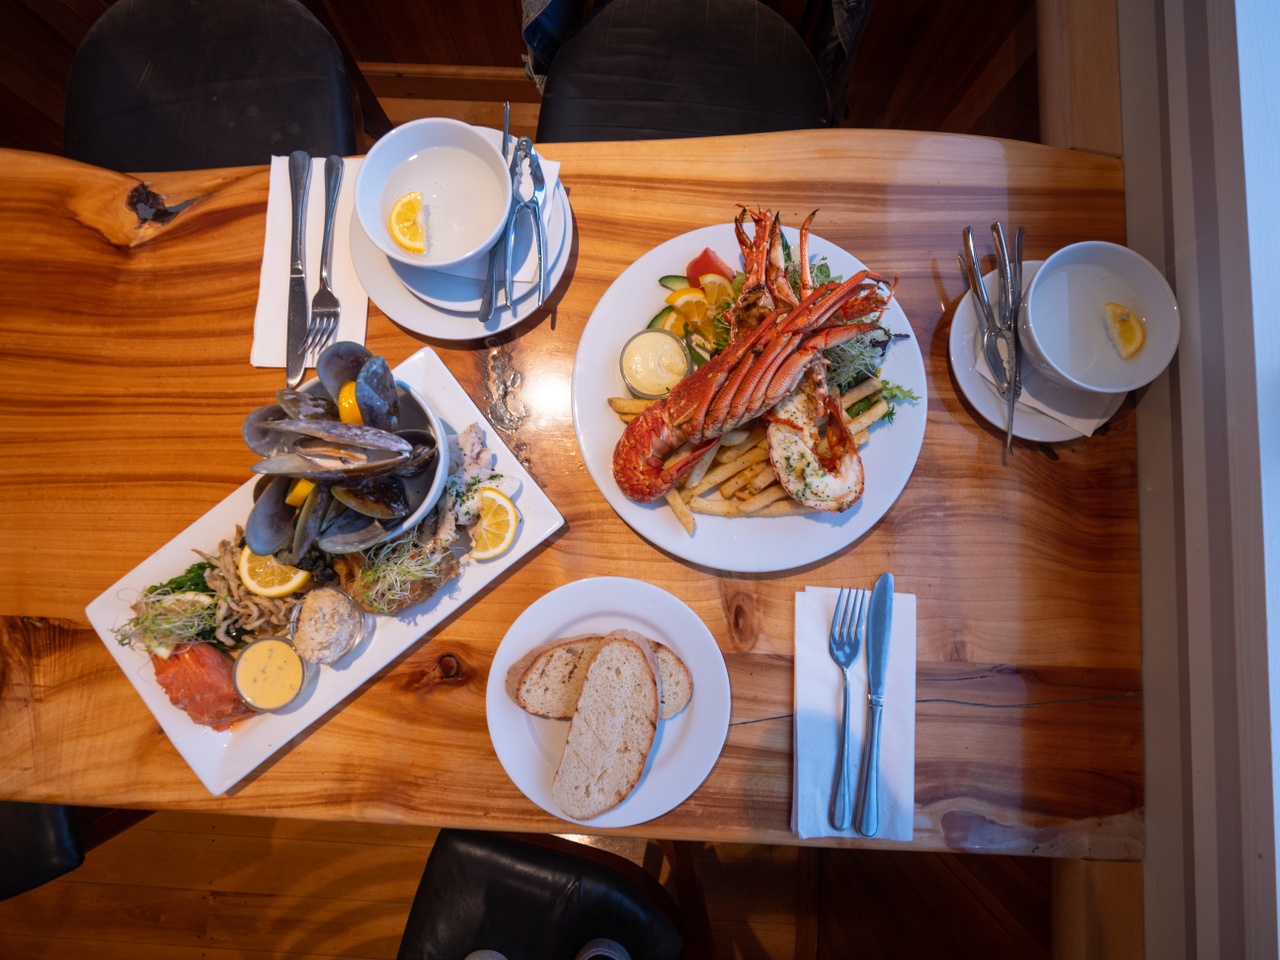 Meal at Pier Hotel Kaikoura. Image courtesy of barekiwi